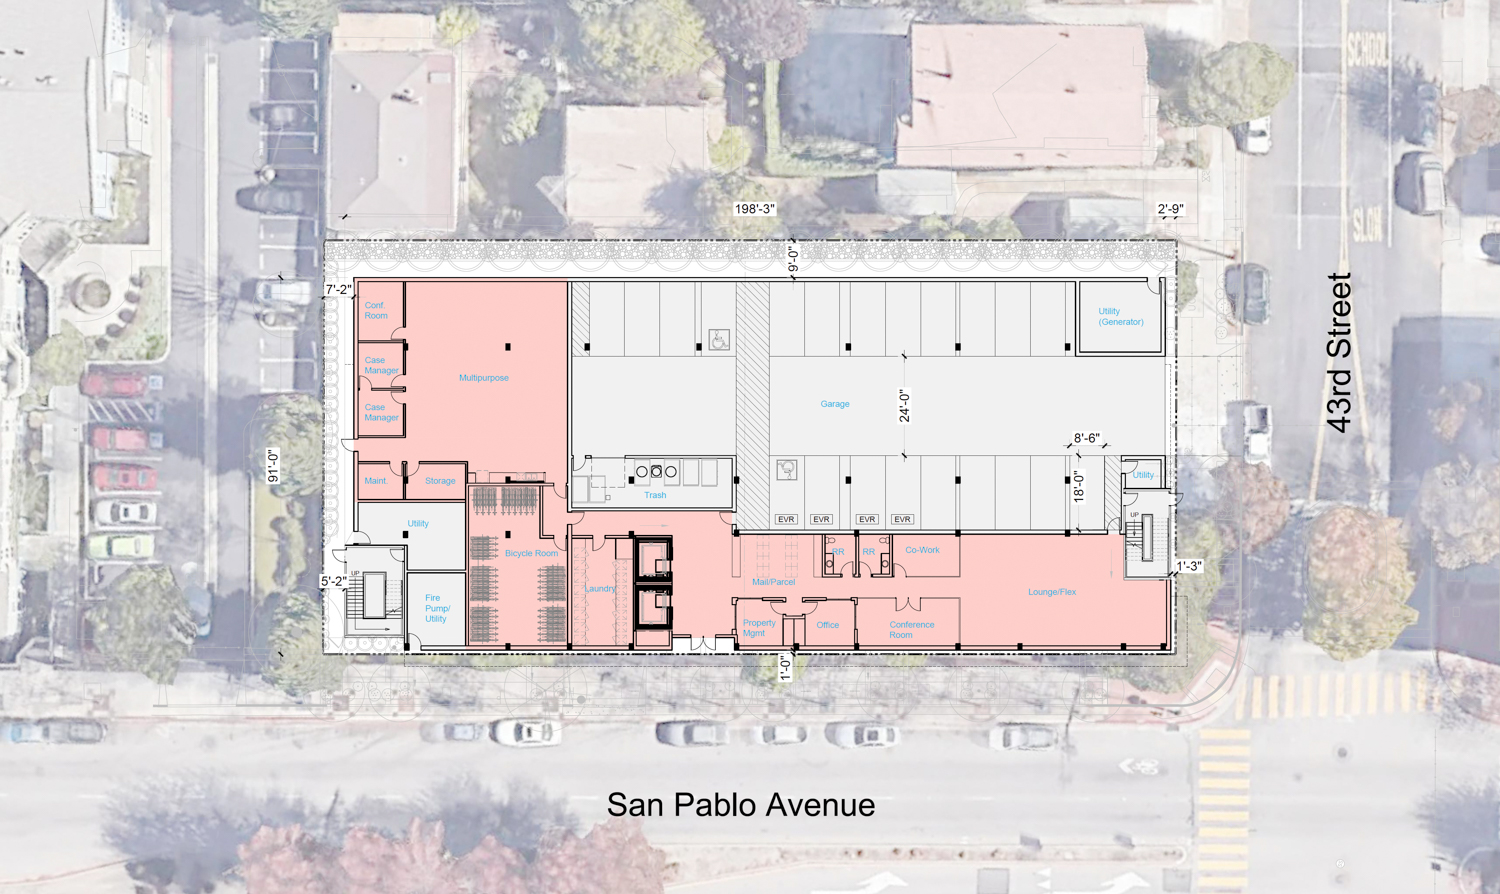 4300 San Pablo Avenue site map, illustration by KTGY